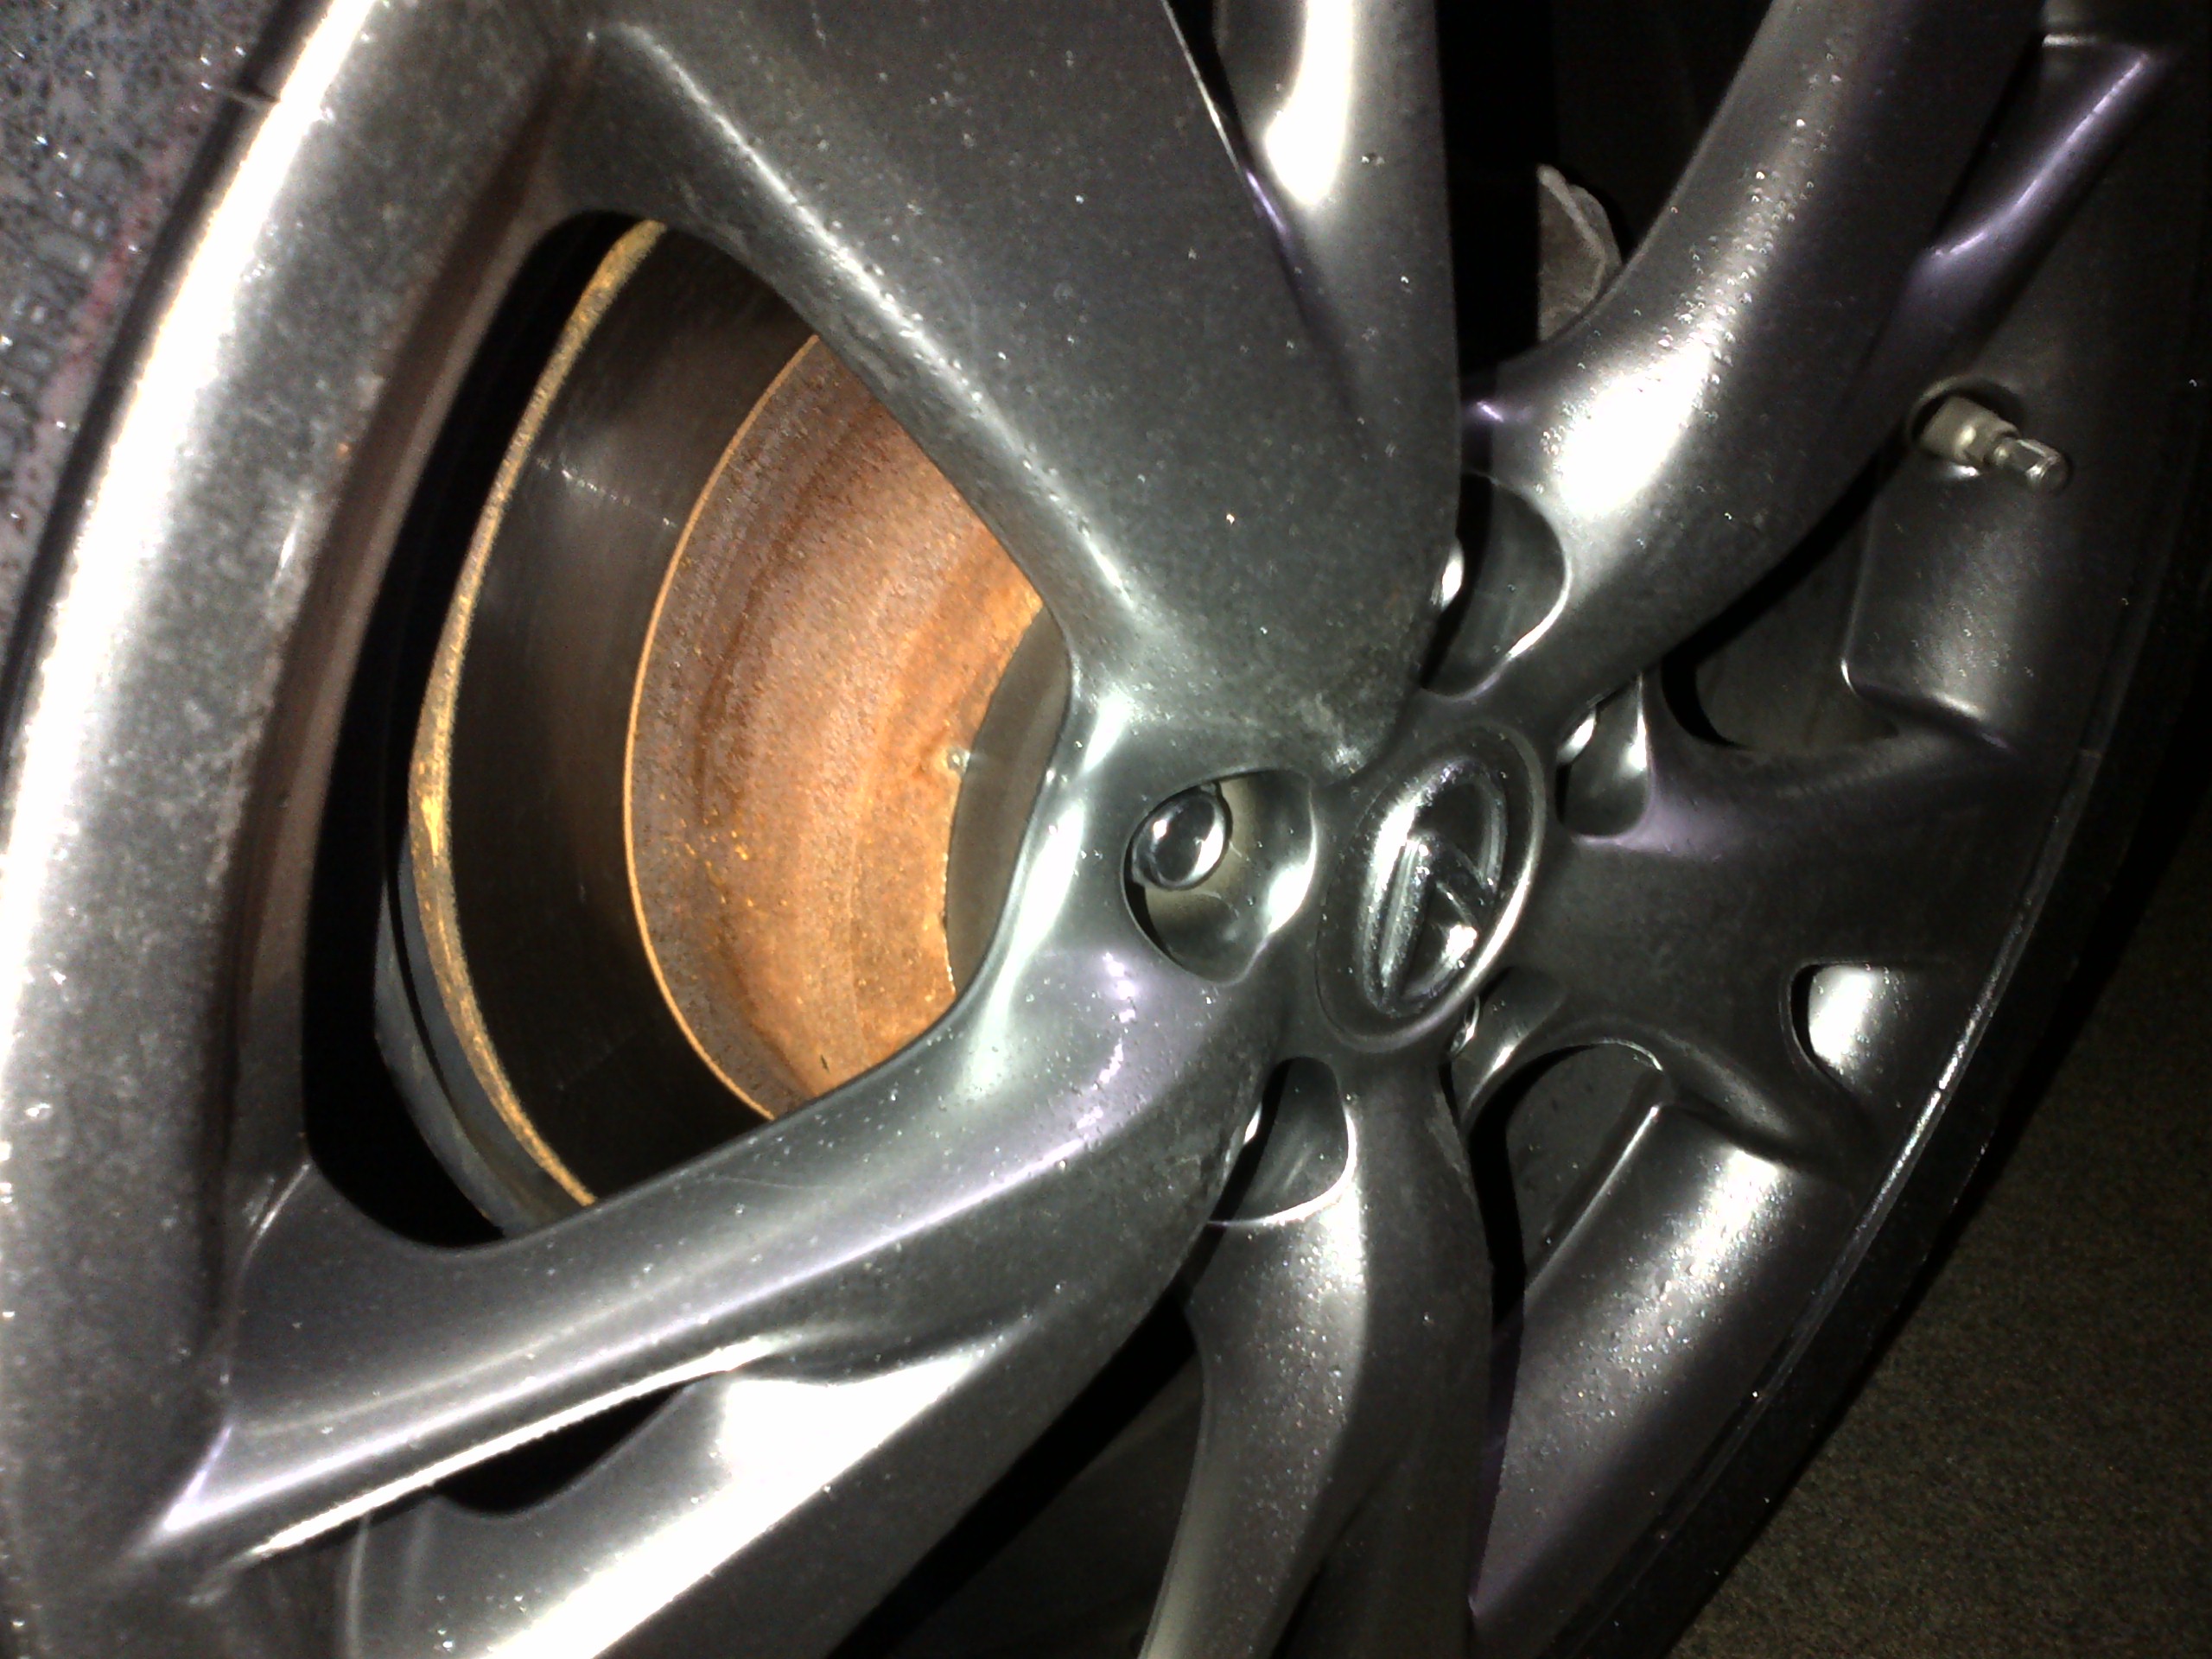 Cover for rusty brake hub. - ClubLexus - Lexus Forum Discussion